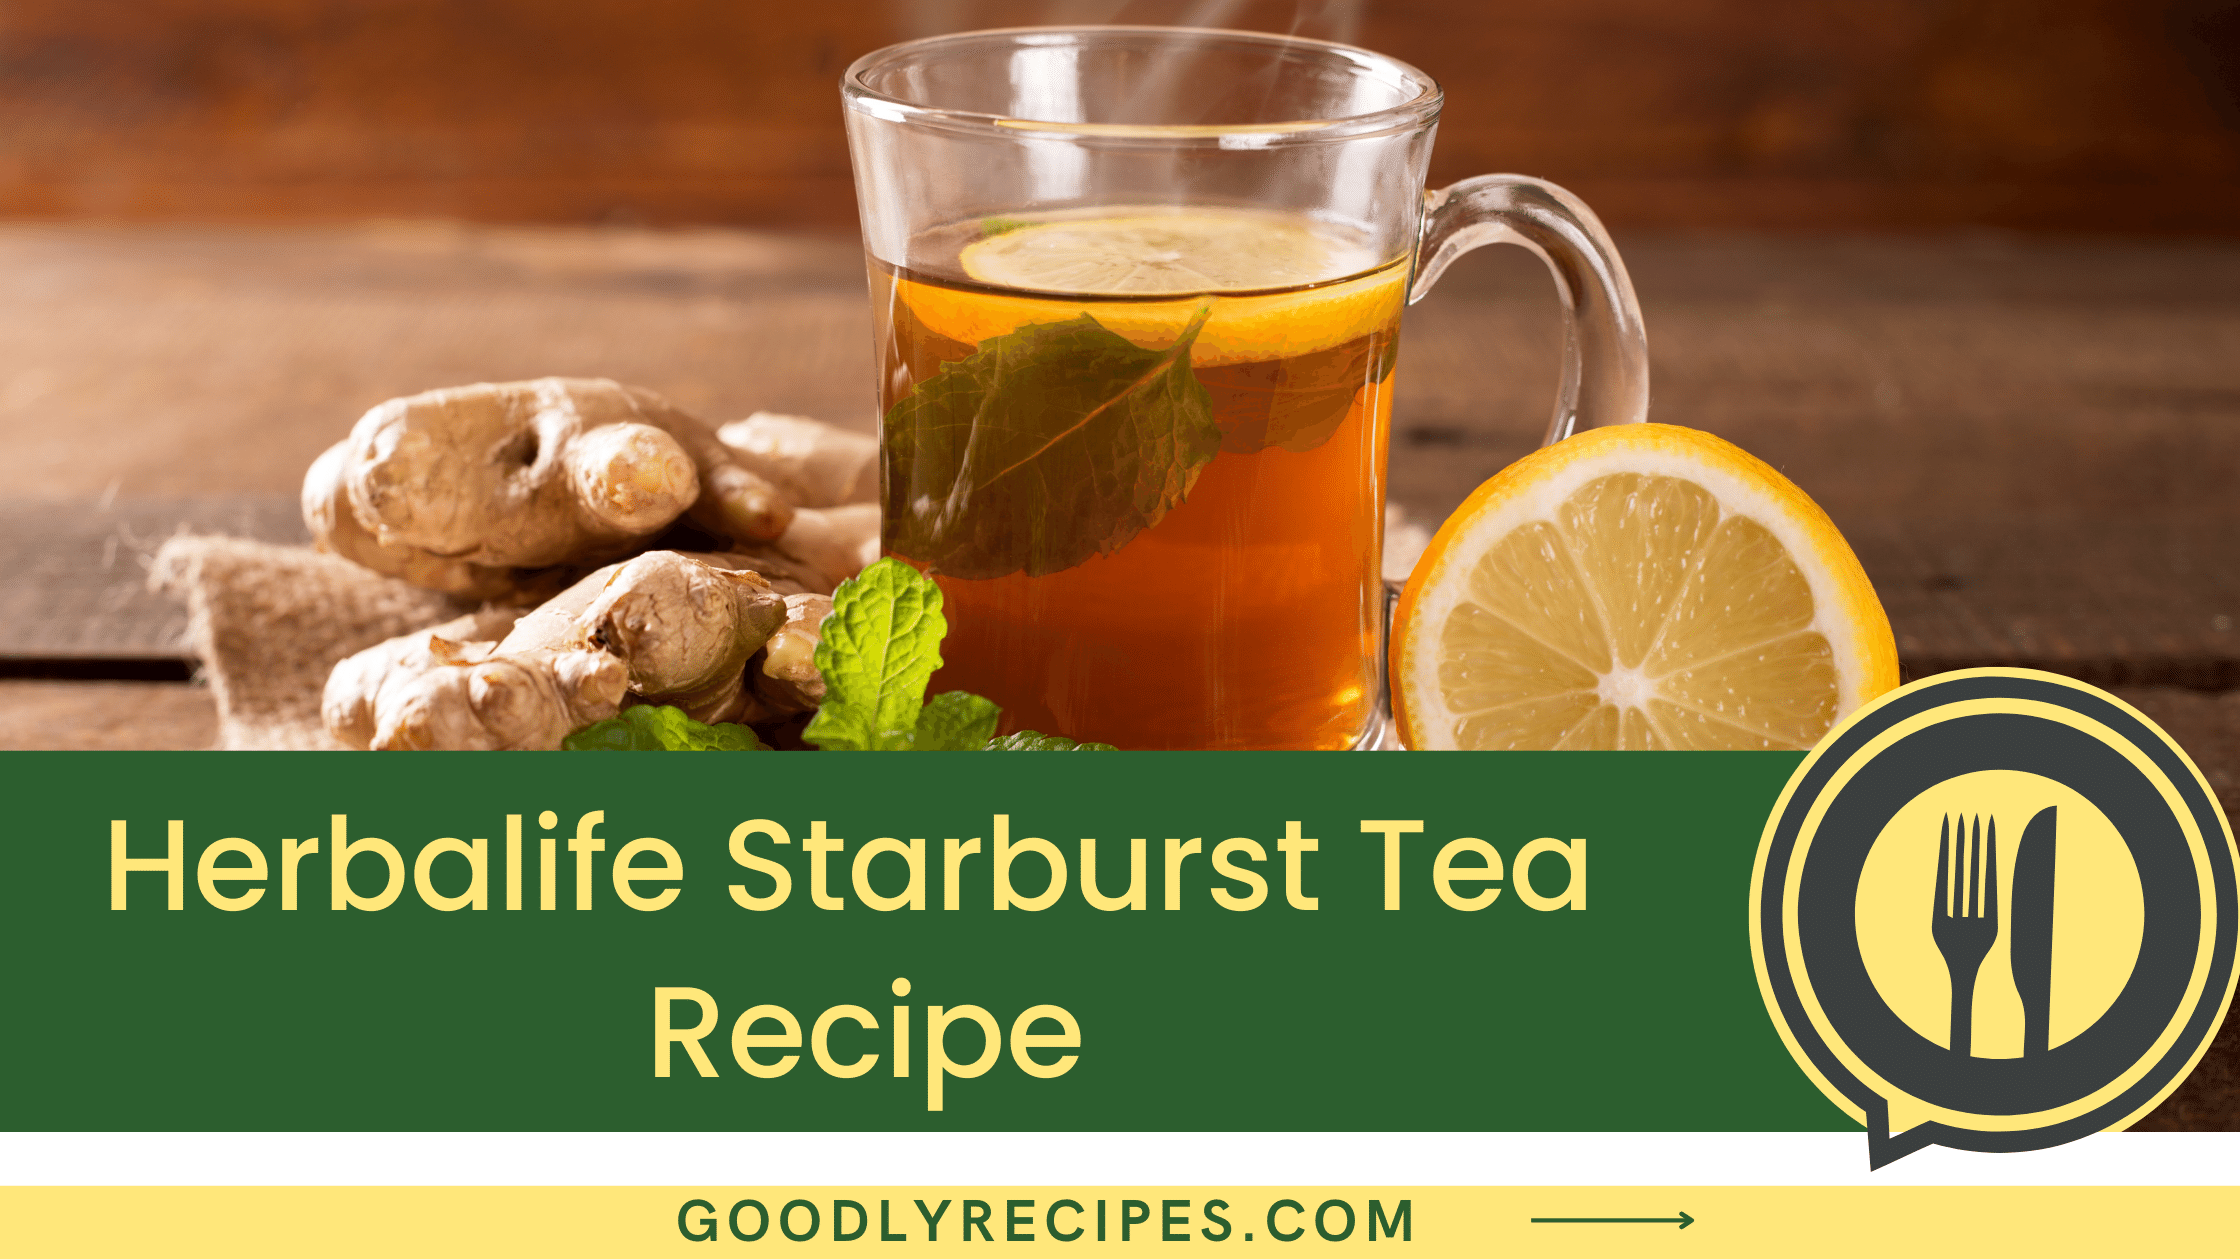 Herbalife Starburst Tea Recipe